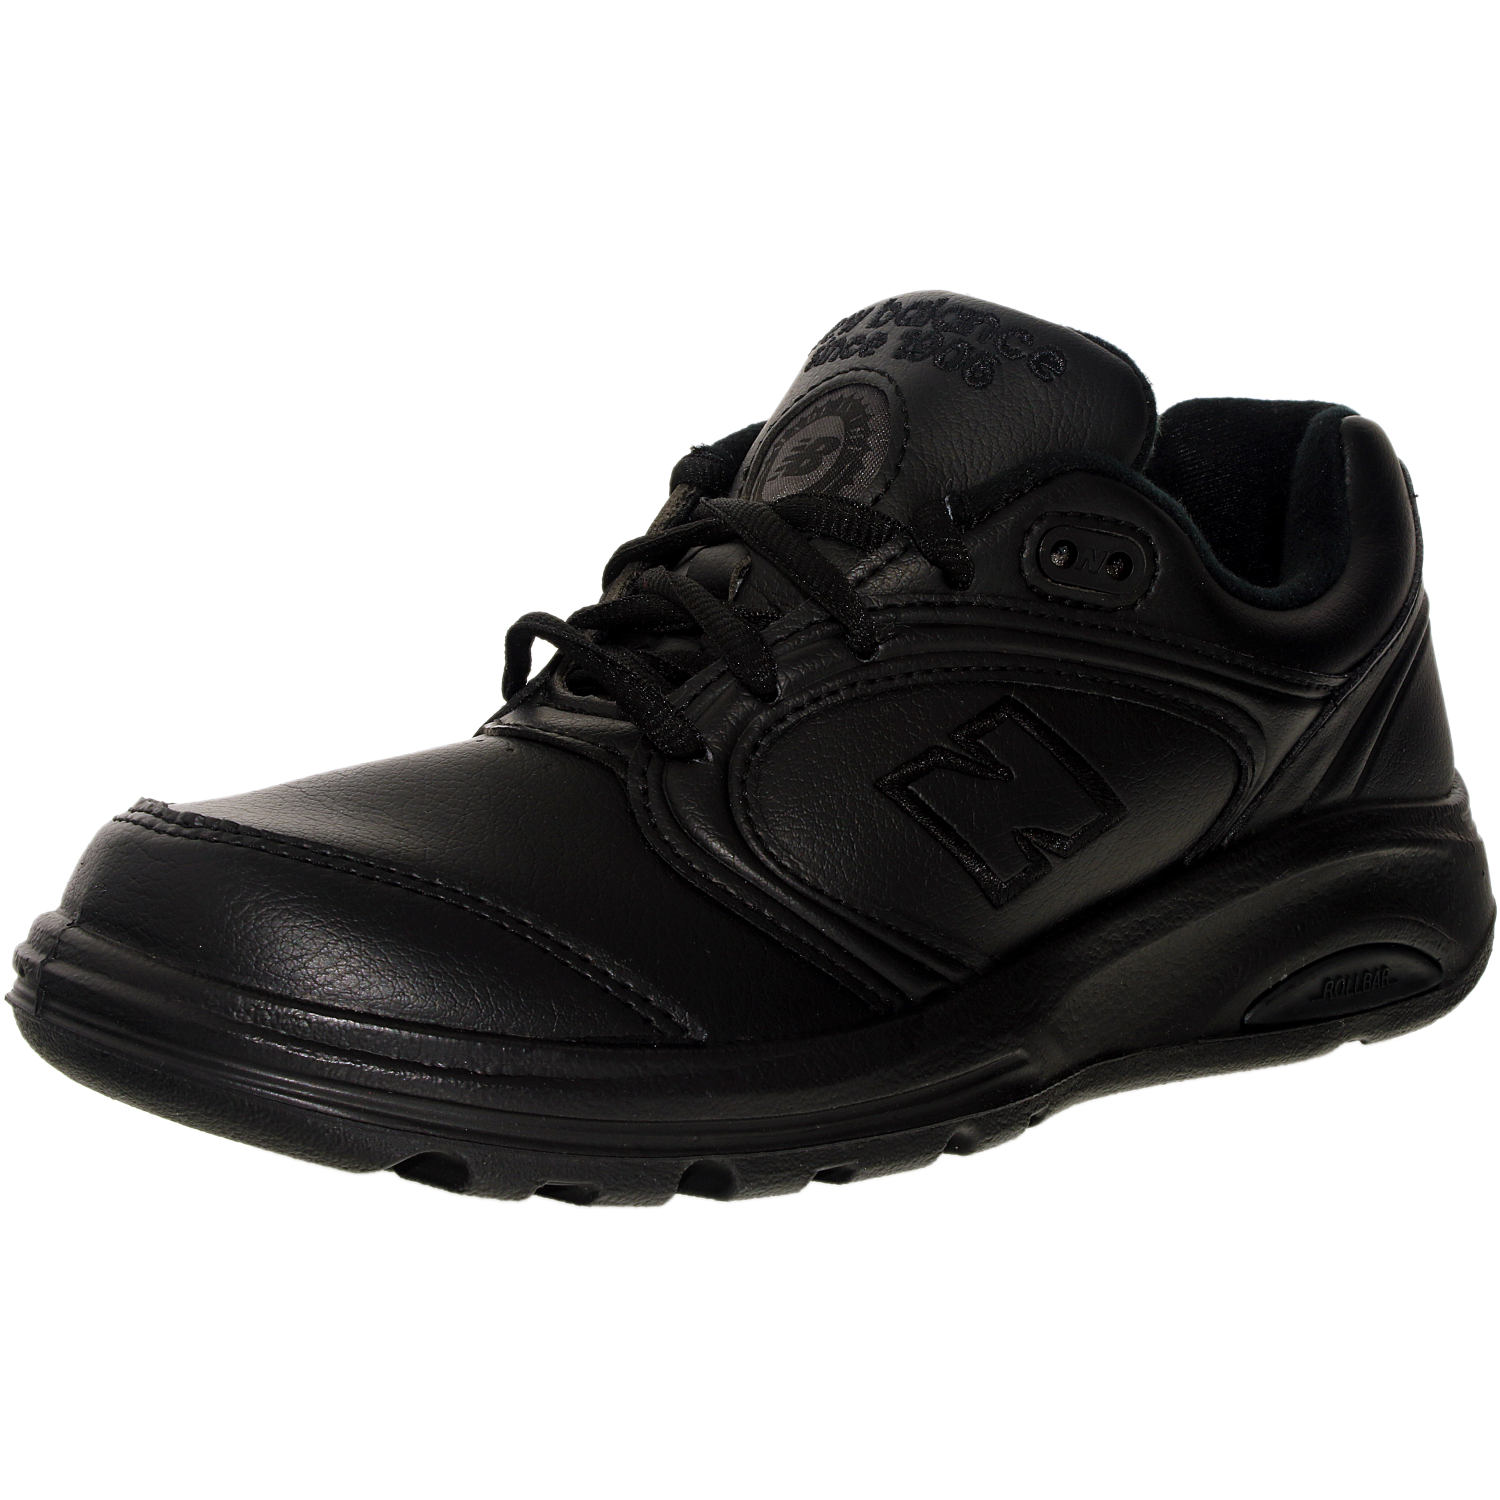 New Balance Women's Ww812Bk Ankle-High Leather Walking Shoe